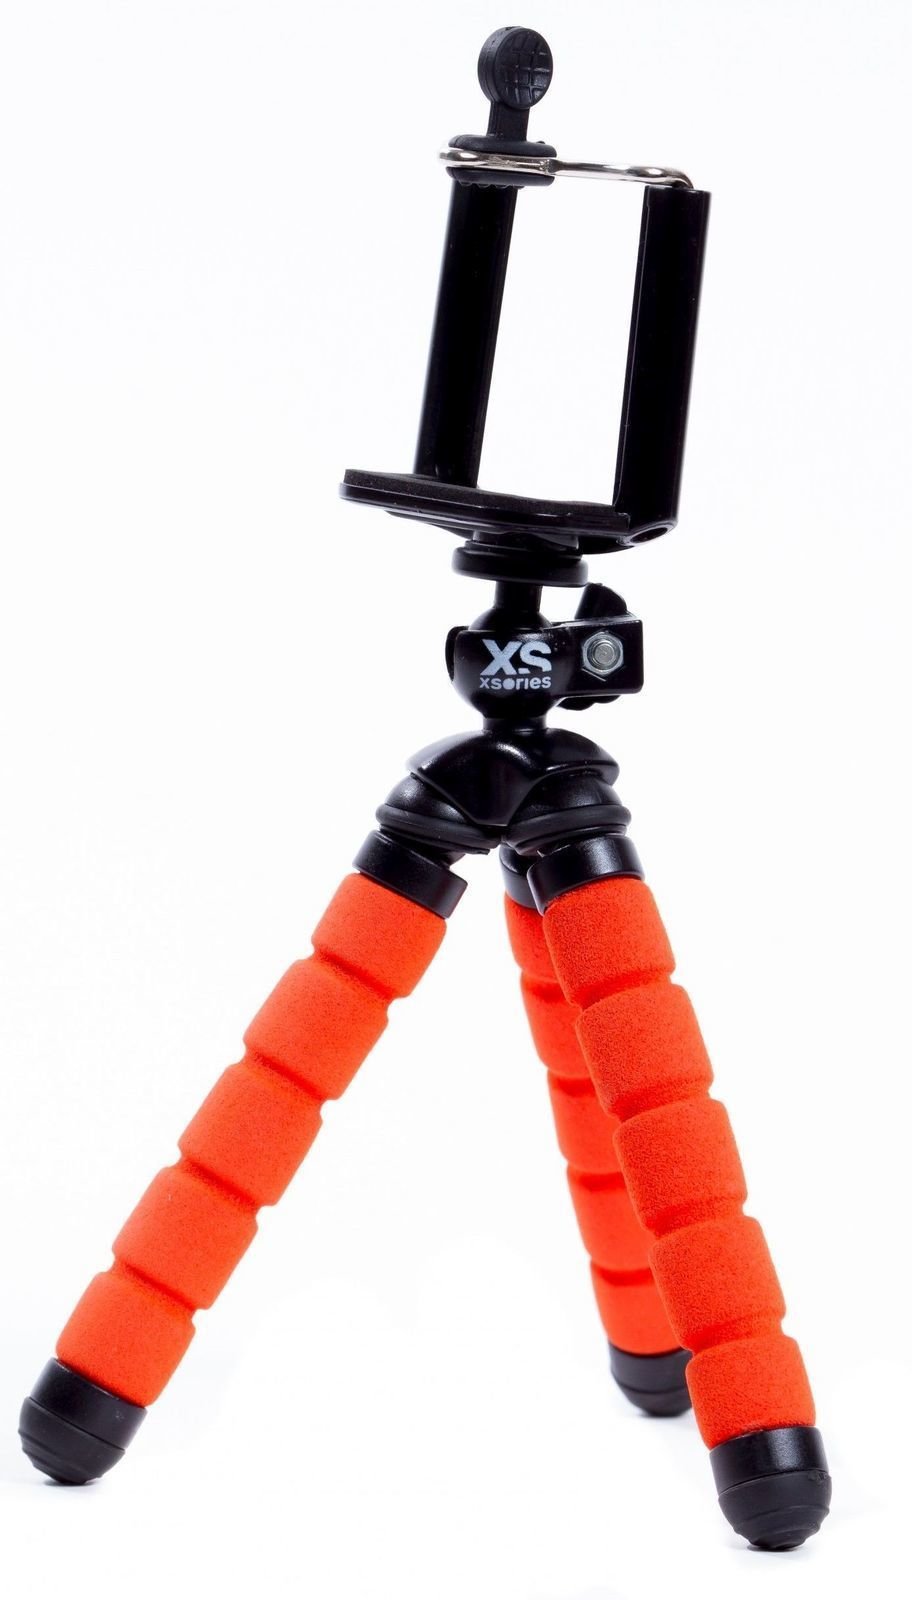 Accesorios GoPro XSories Bend and Twist Orange